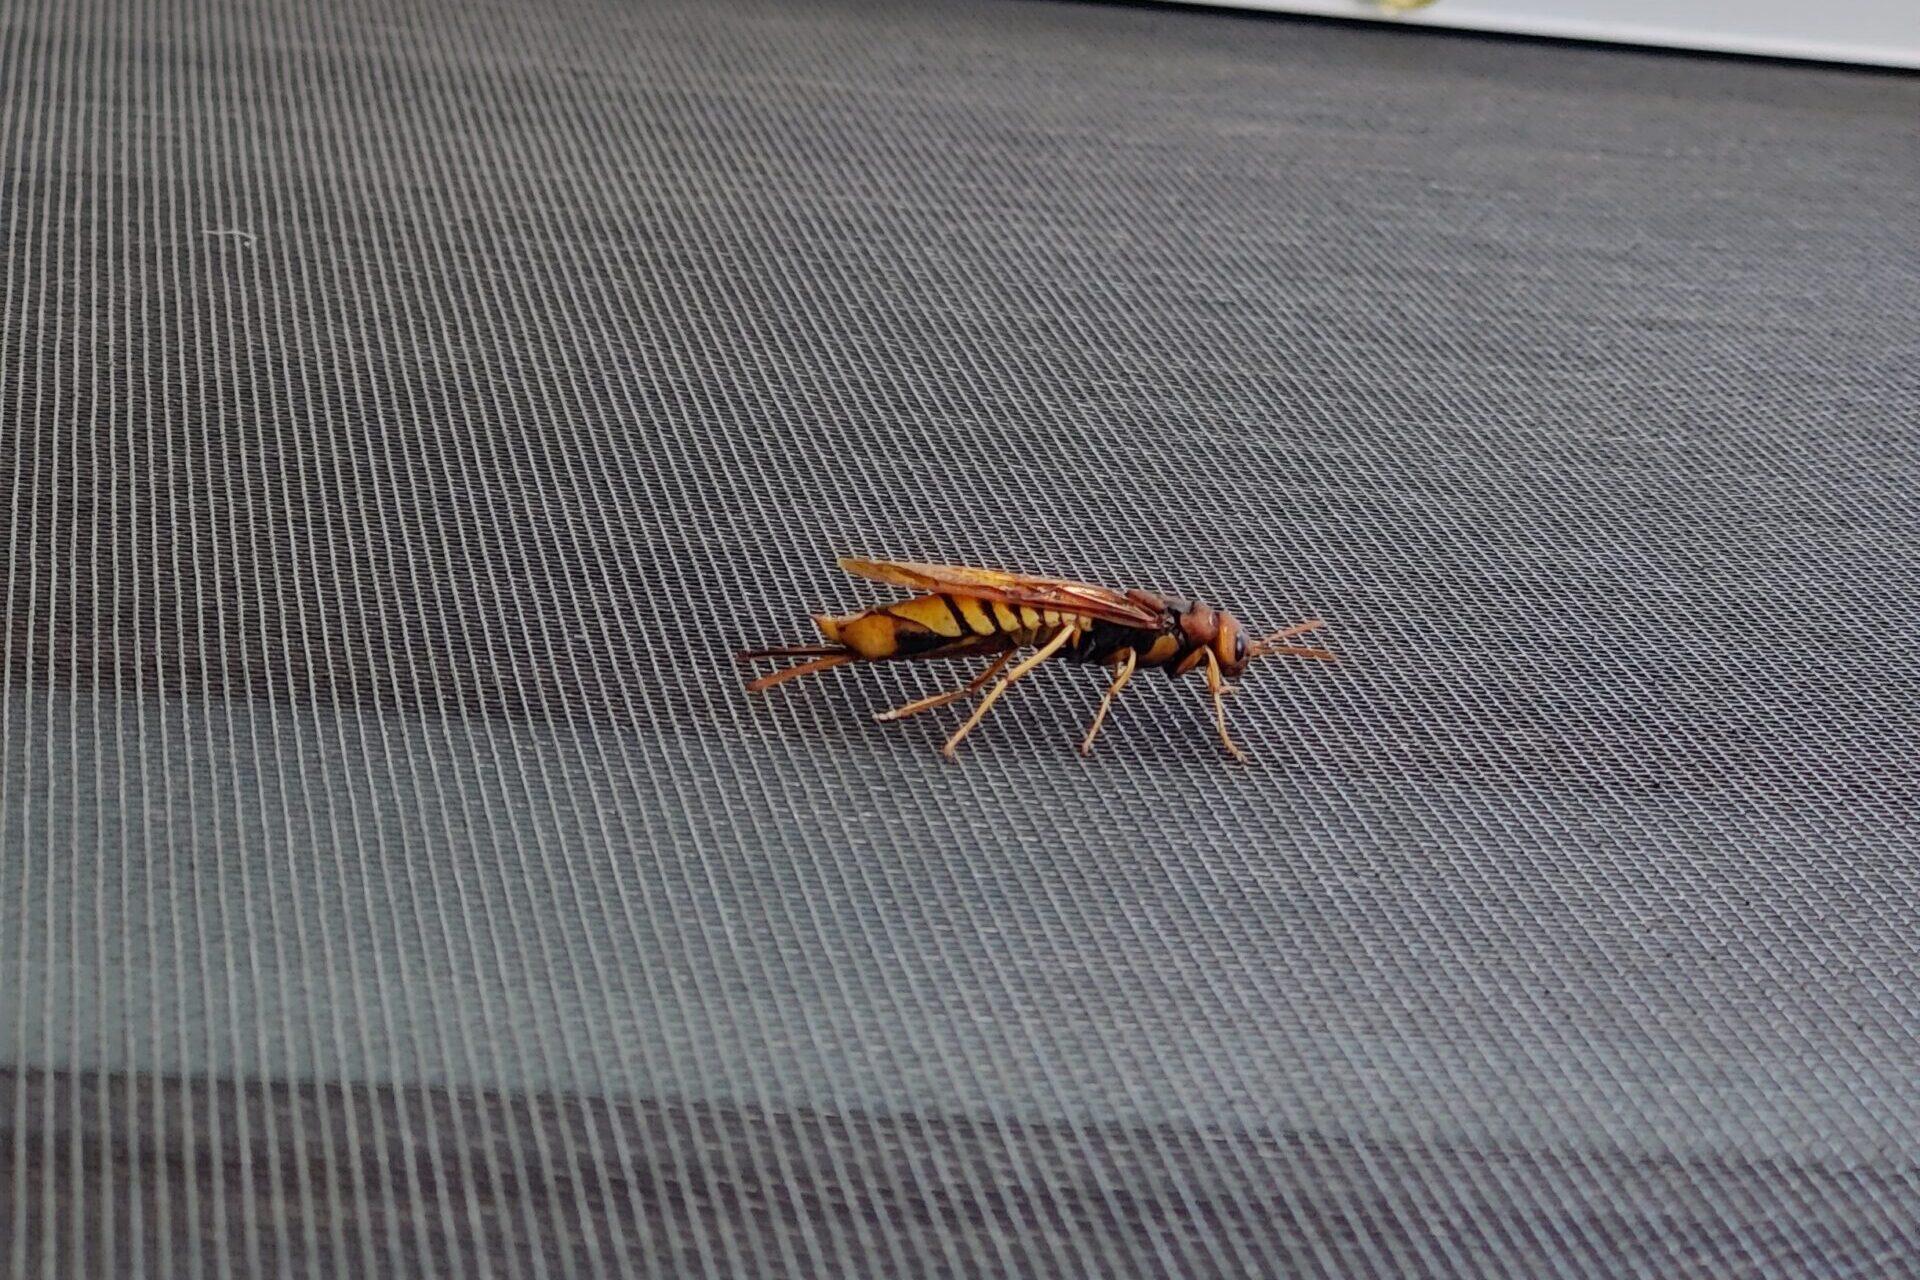 Hornet Wasp